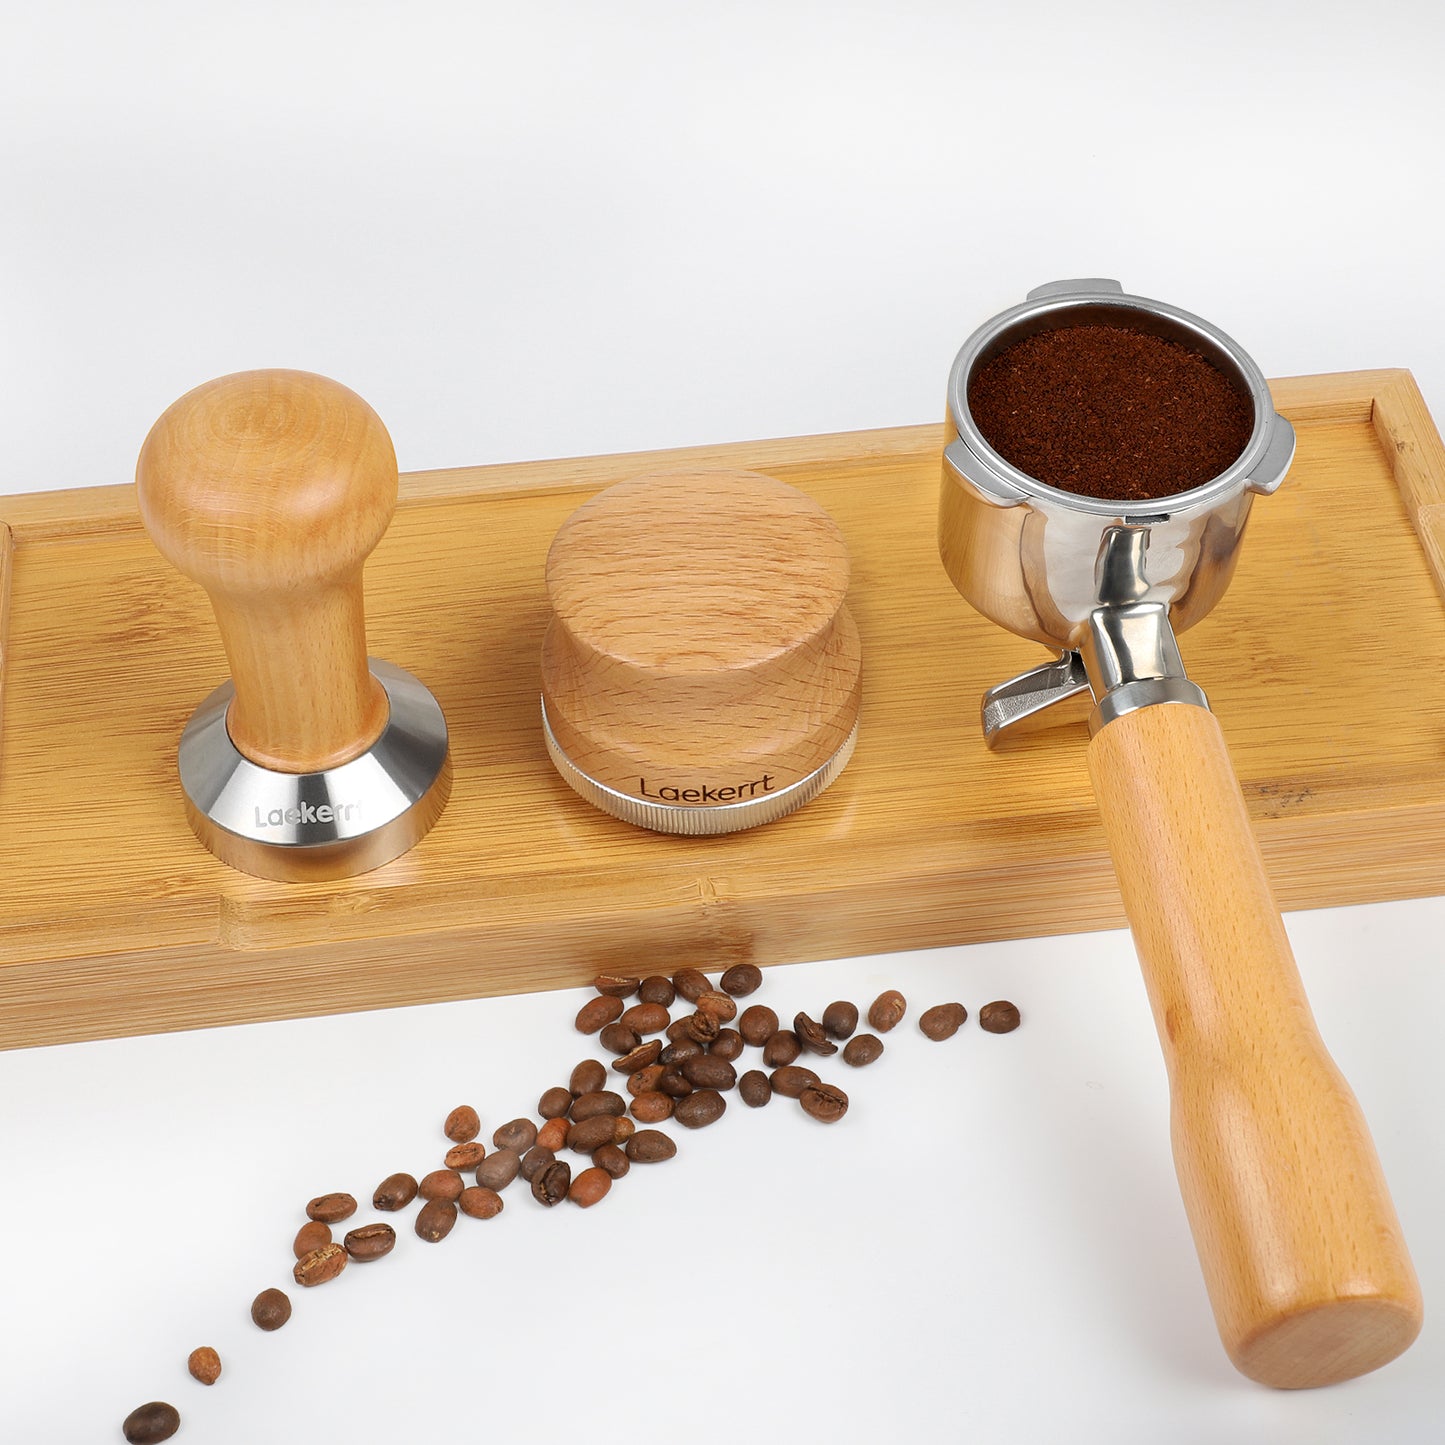 Laekerrt 51mm Espresso Tamper, Stainless Steel Base Coffee Tamper with Wood Handle, 100% Flat Tamper Tool